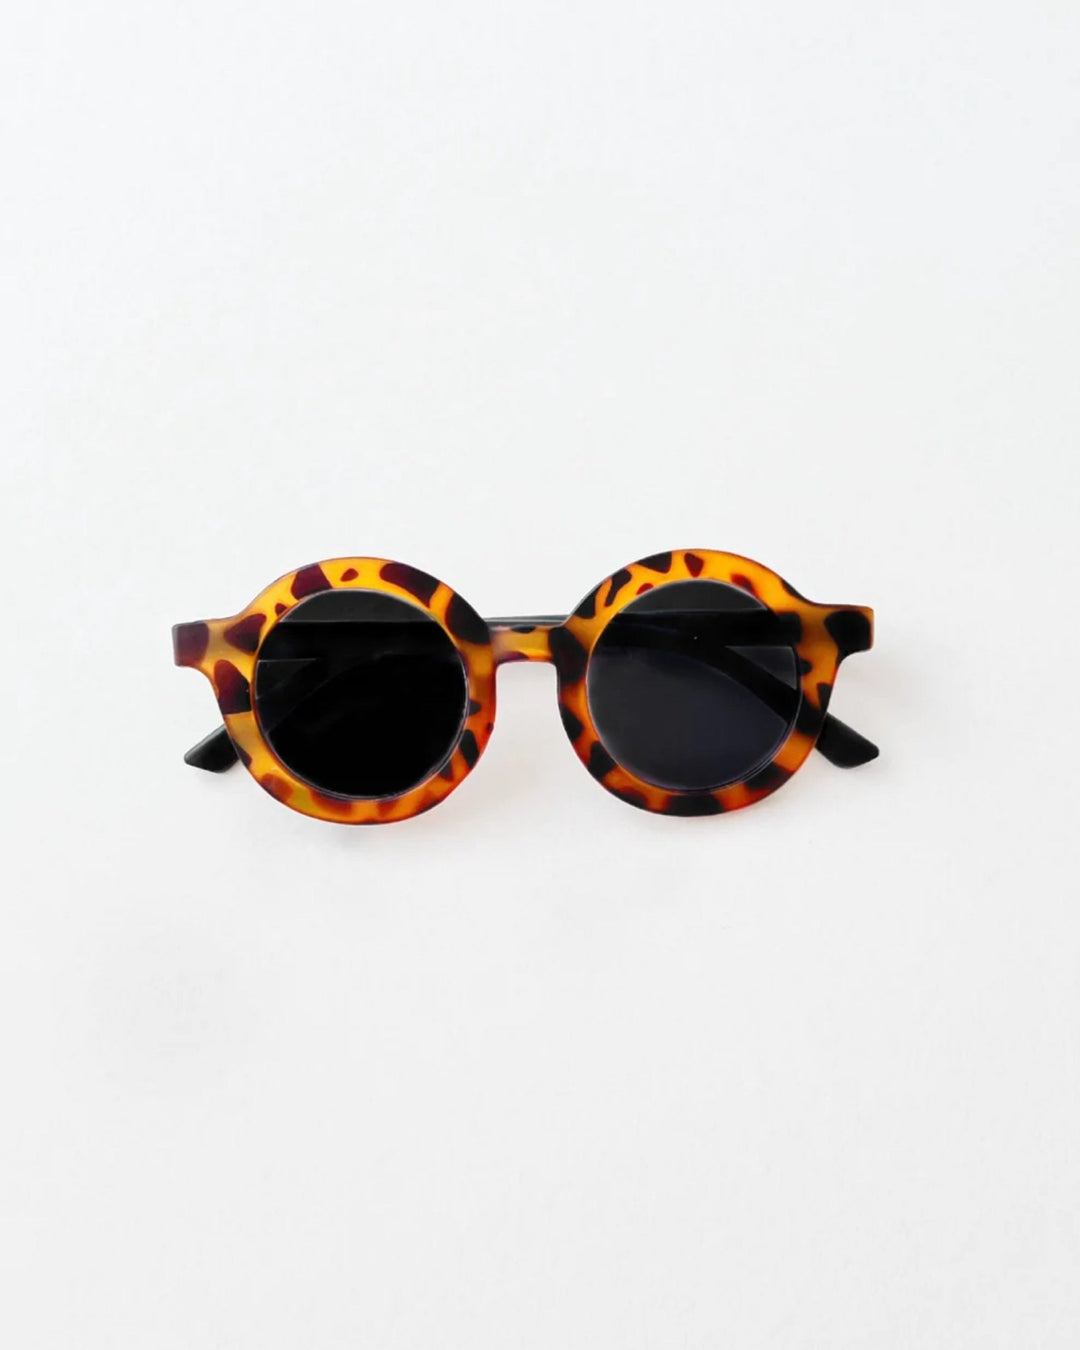 Round Sunglasses, Tortoise - Baby & Toddler Clothing Accessories - LUCKY PANDA KIDS